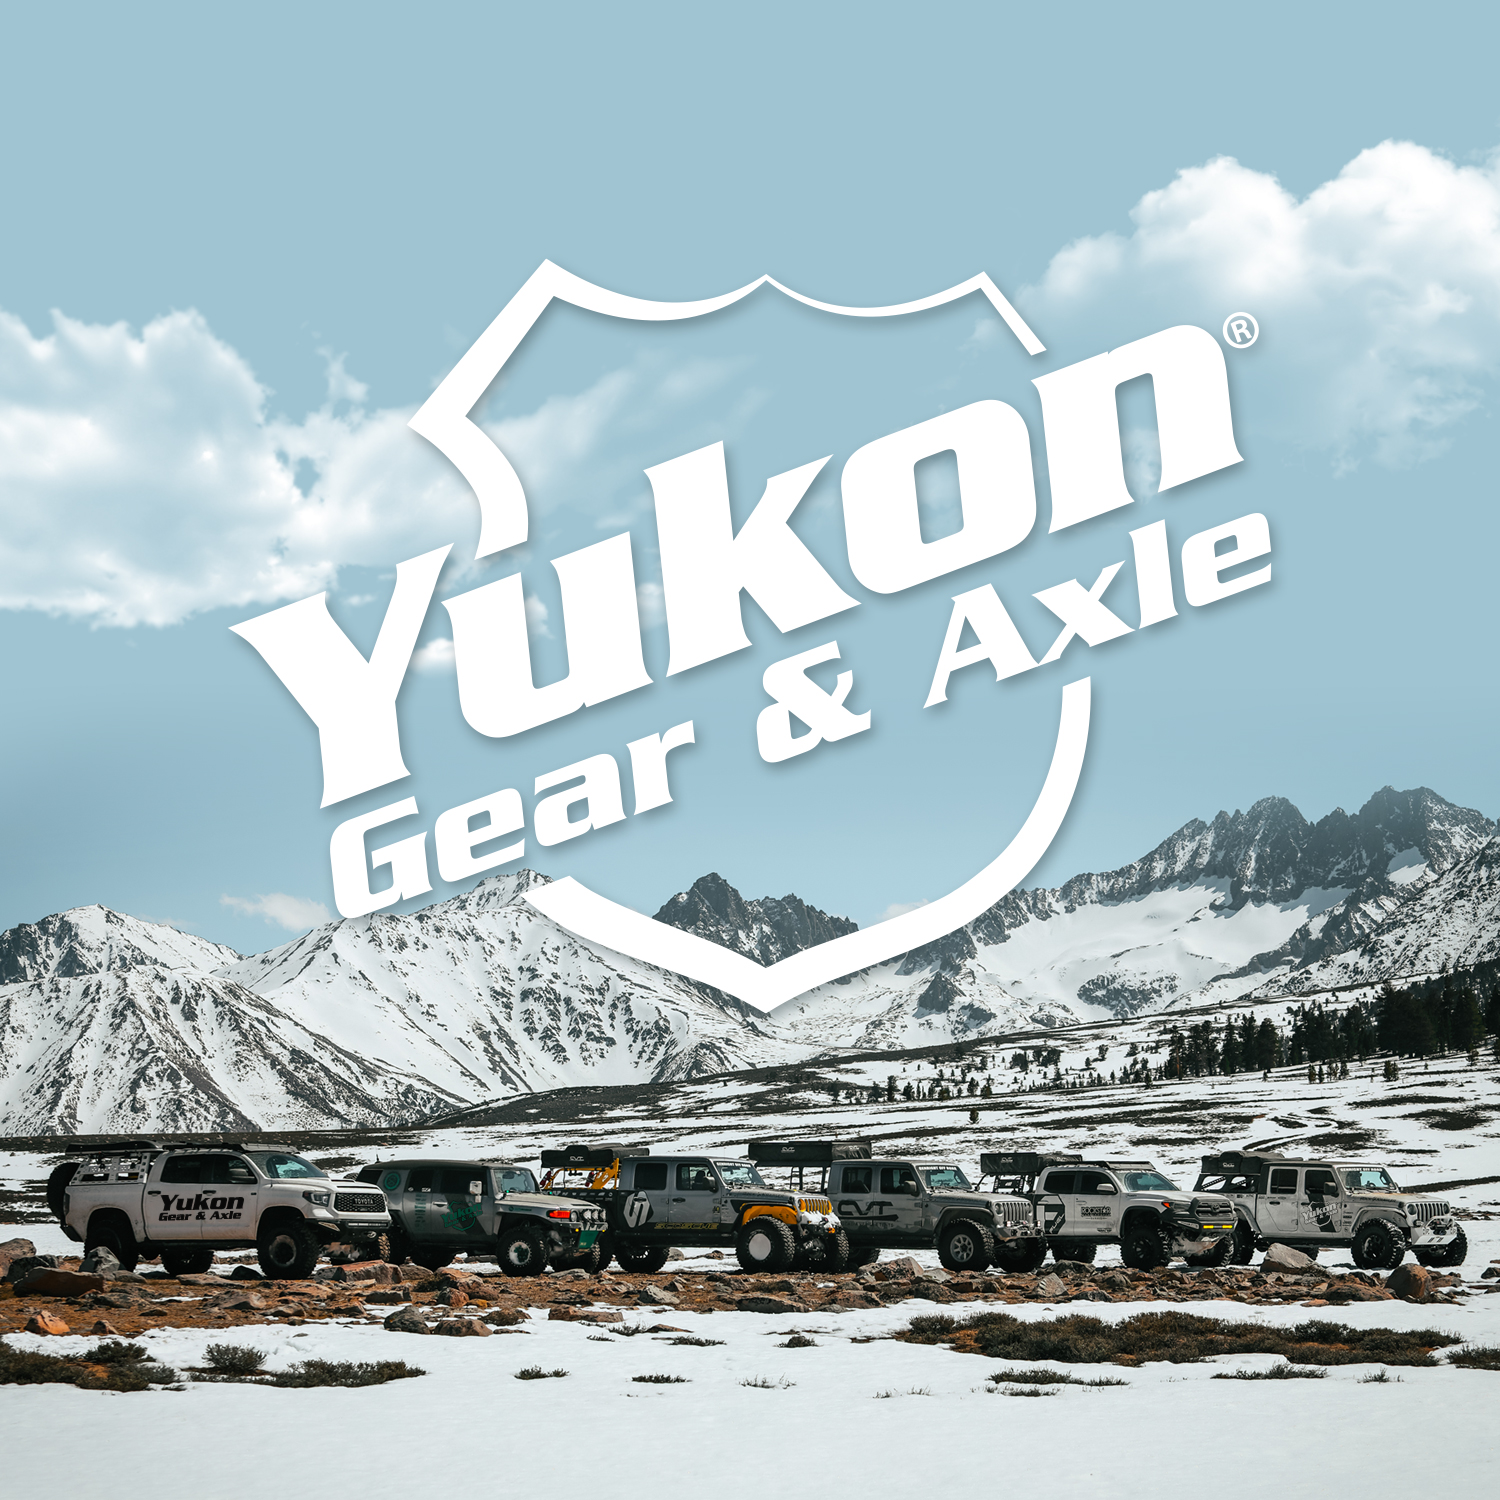 Yukon high performance ring & pinion set, '10 & down Ford 10.5", 3.55 ratio 